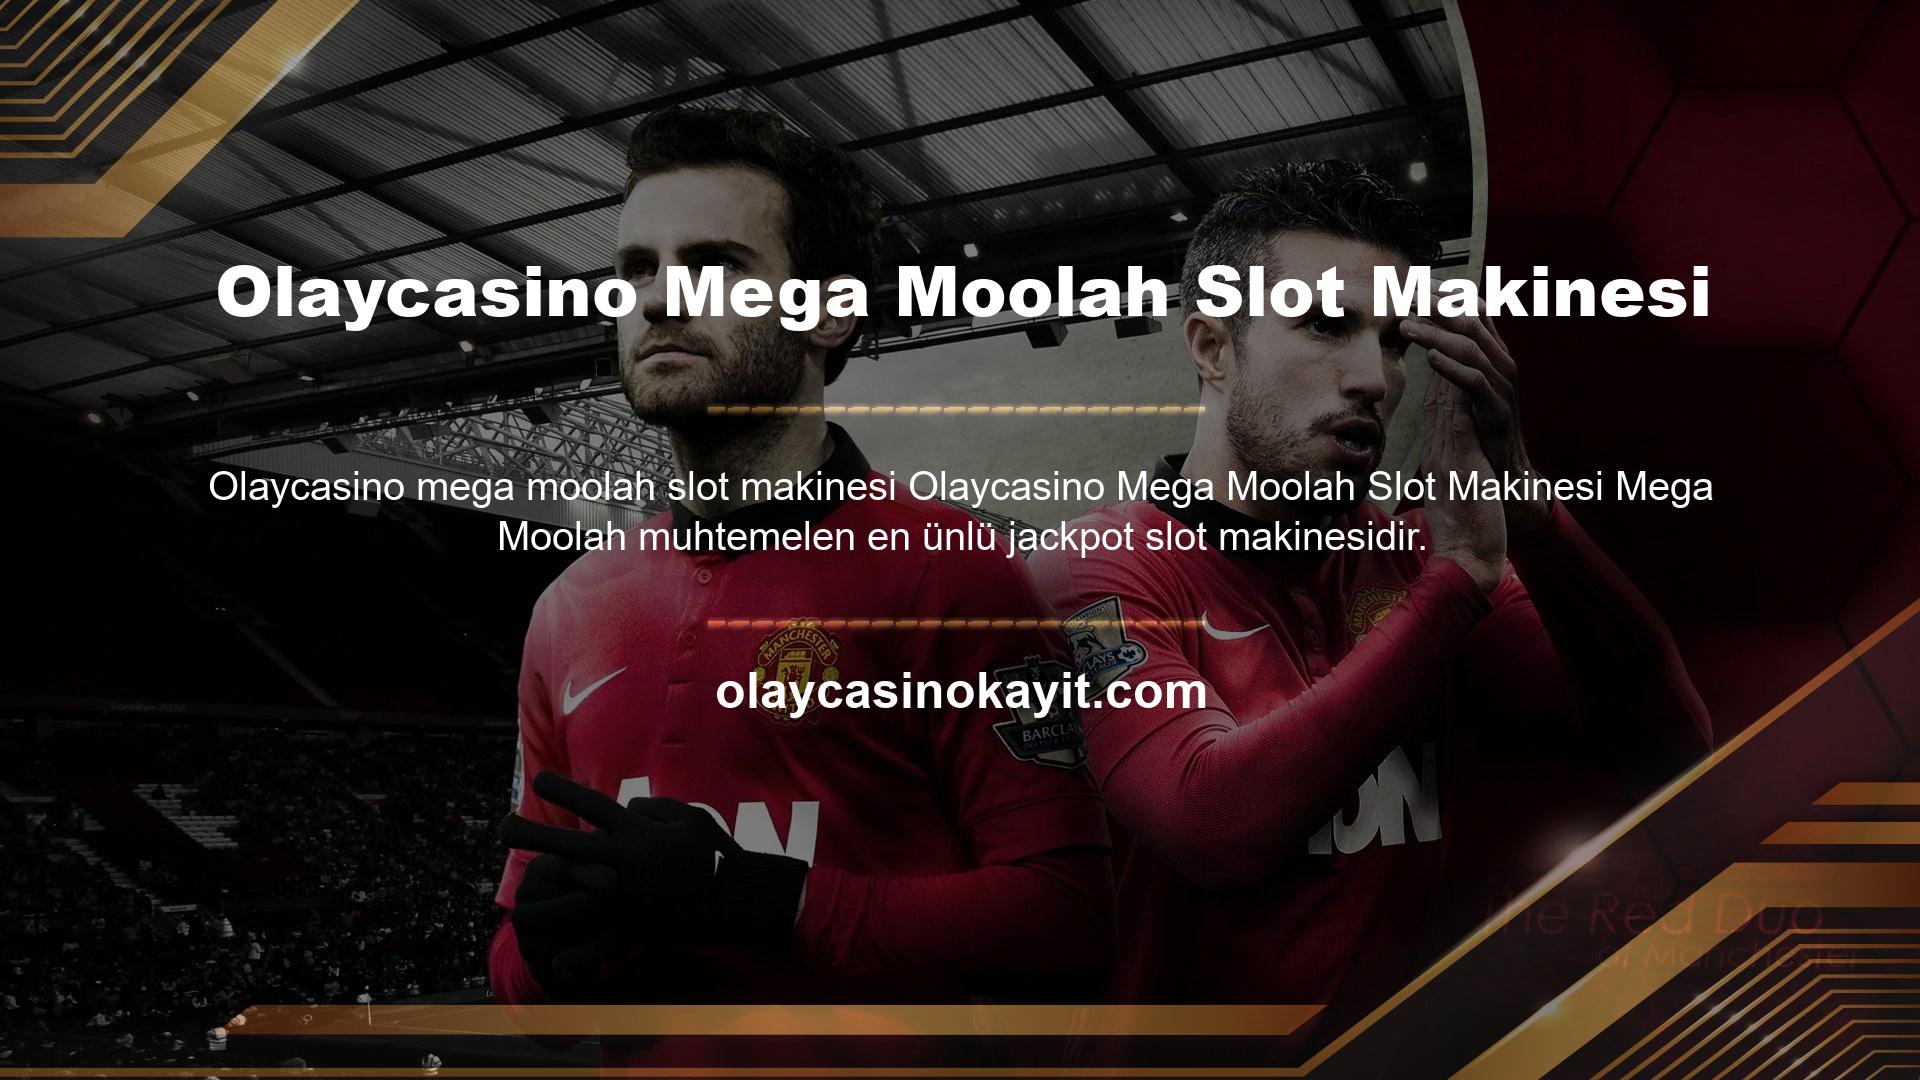 Olaycasino Mega Moolah Slot Makinesi